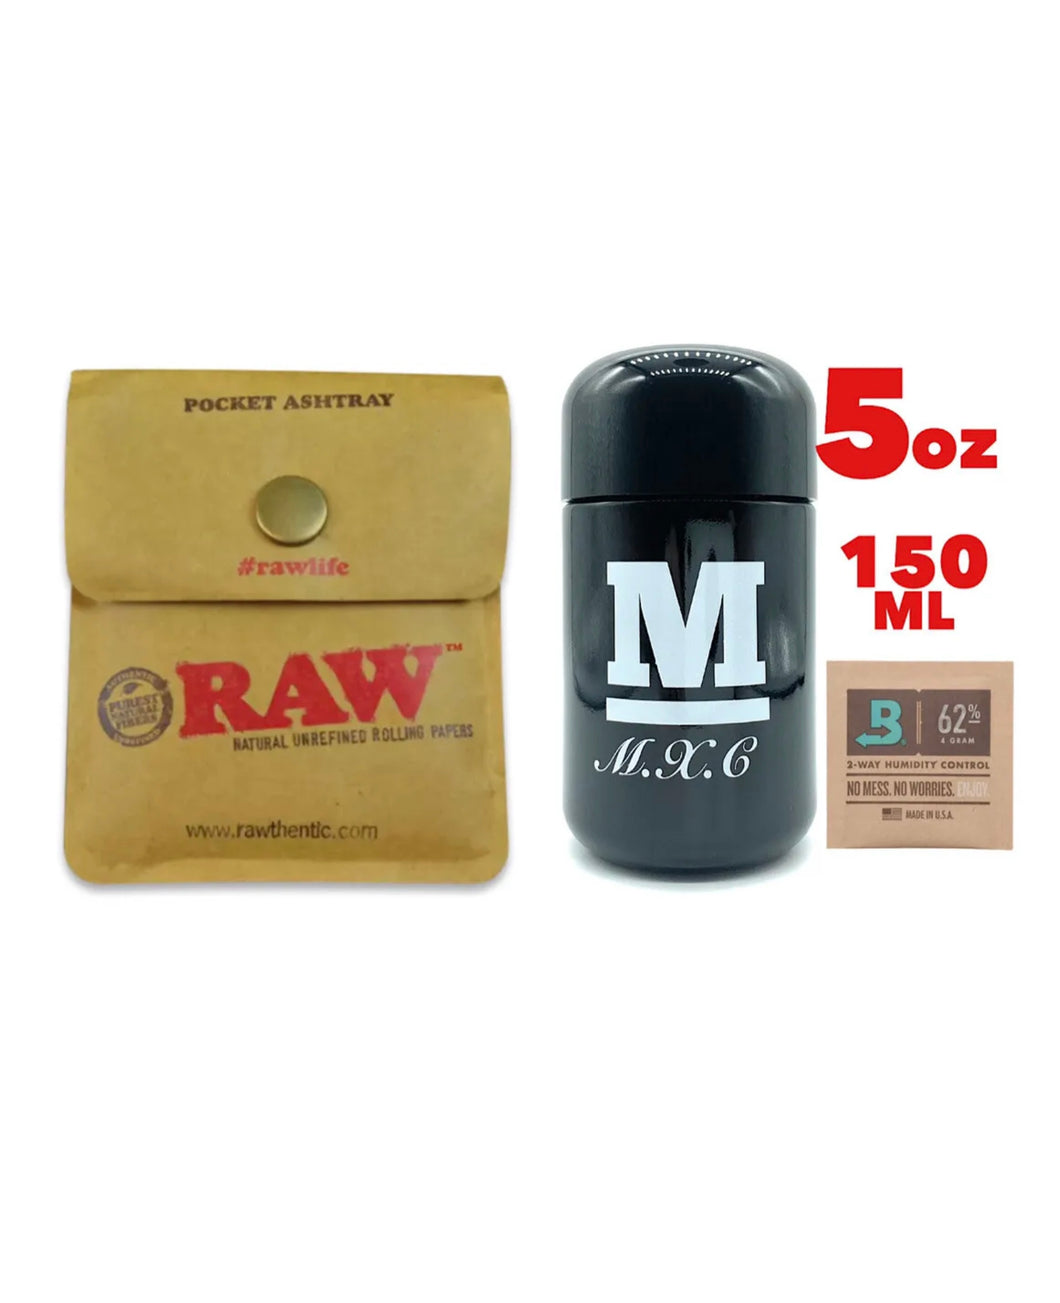 raw pocket ashtray+ M glass herb stash jar UV smell proof + boveda